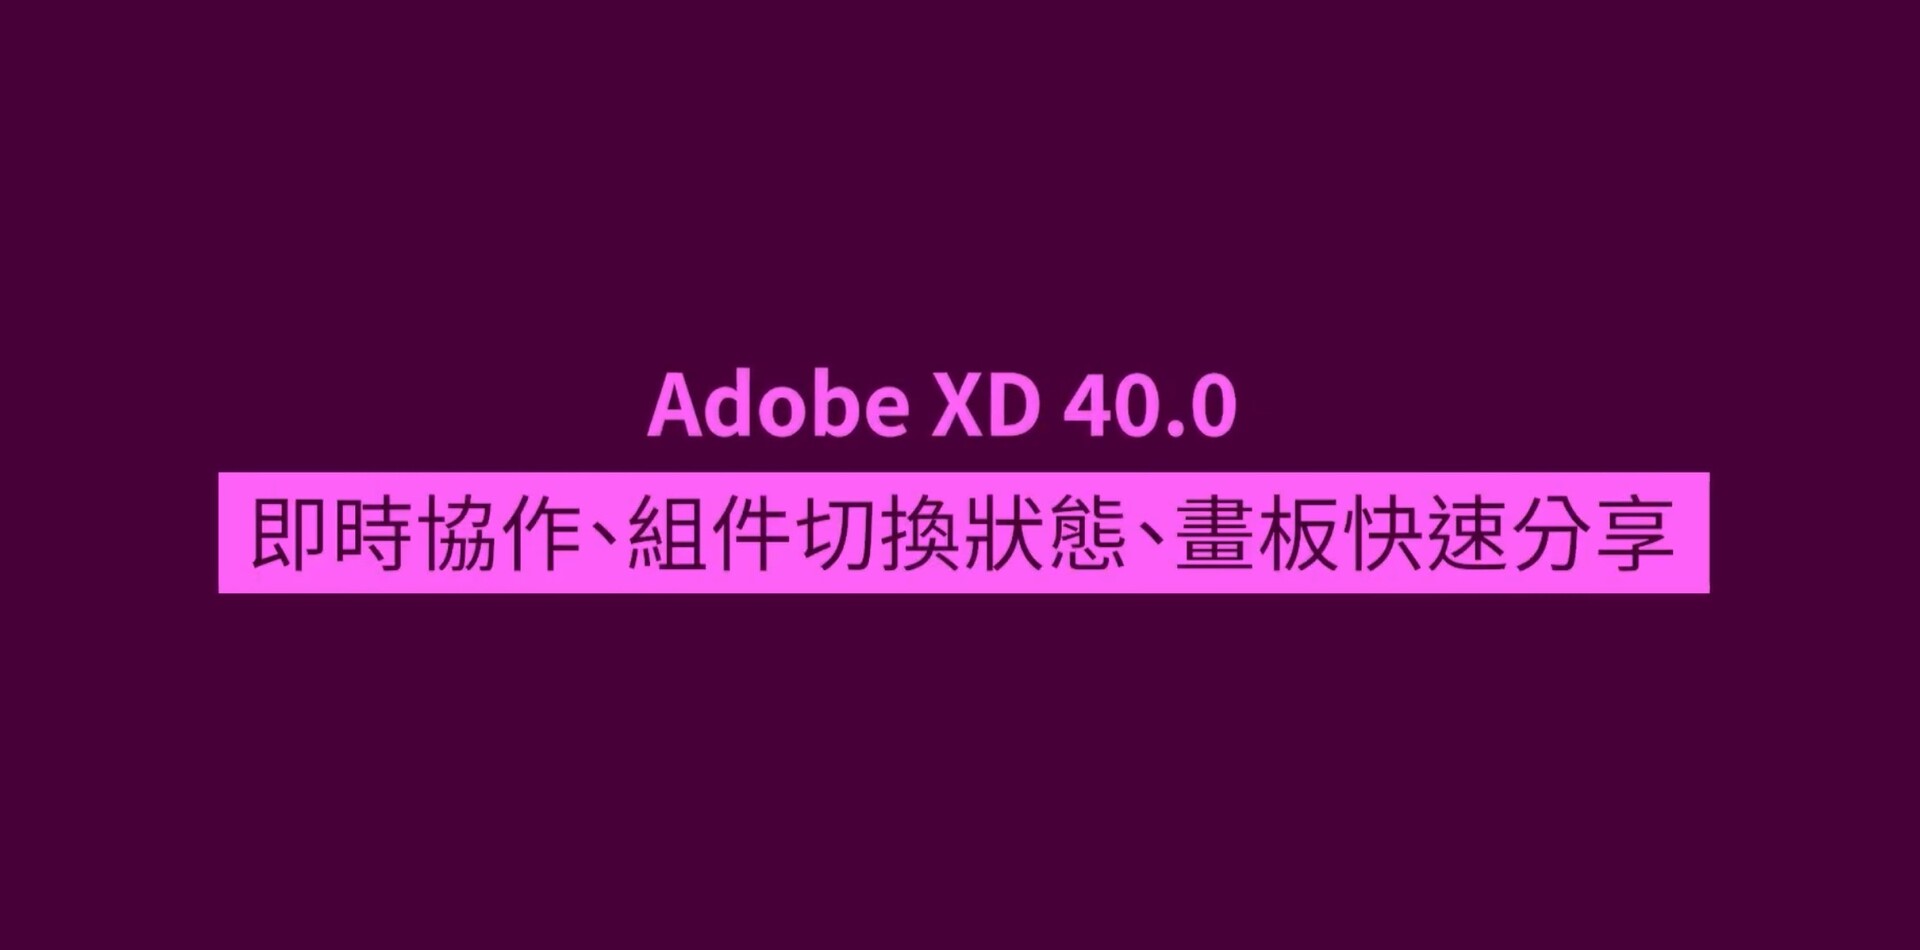 Adobe XD 40.0 即使协作功能使用教程